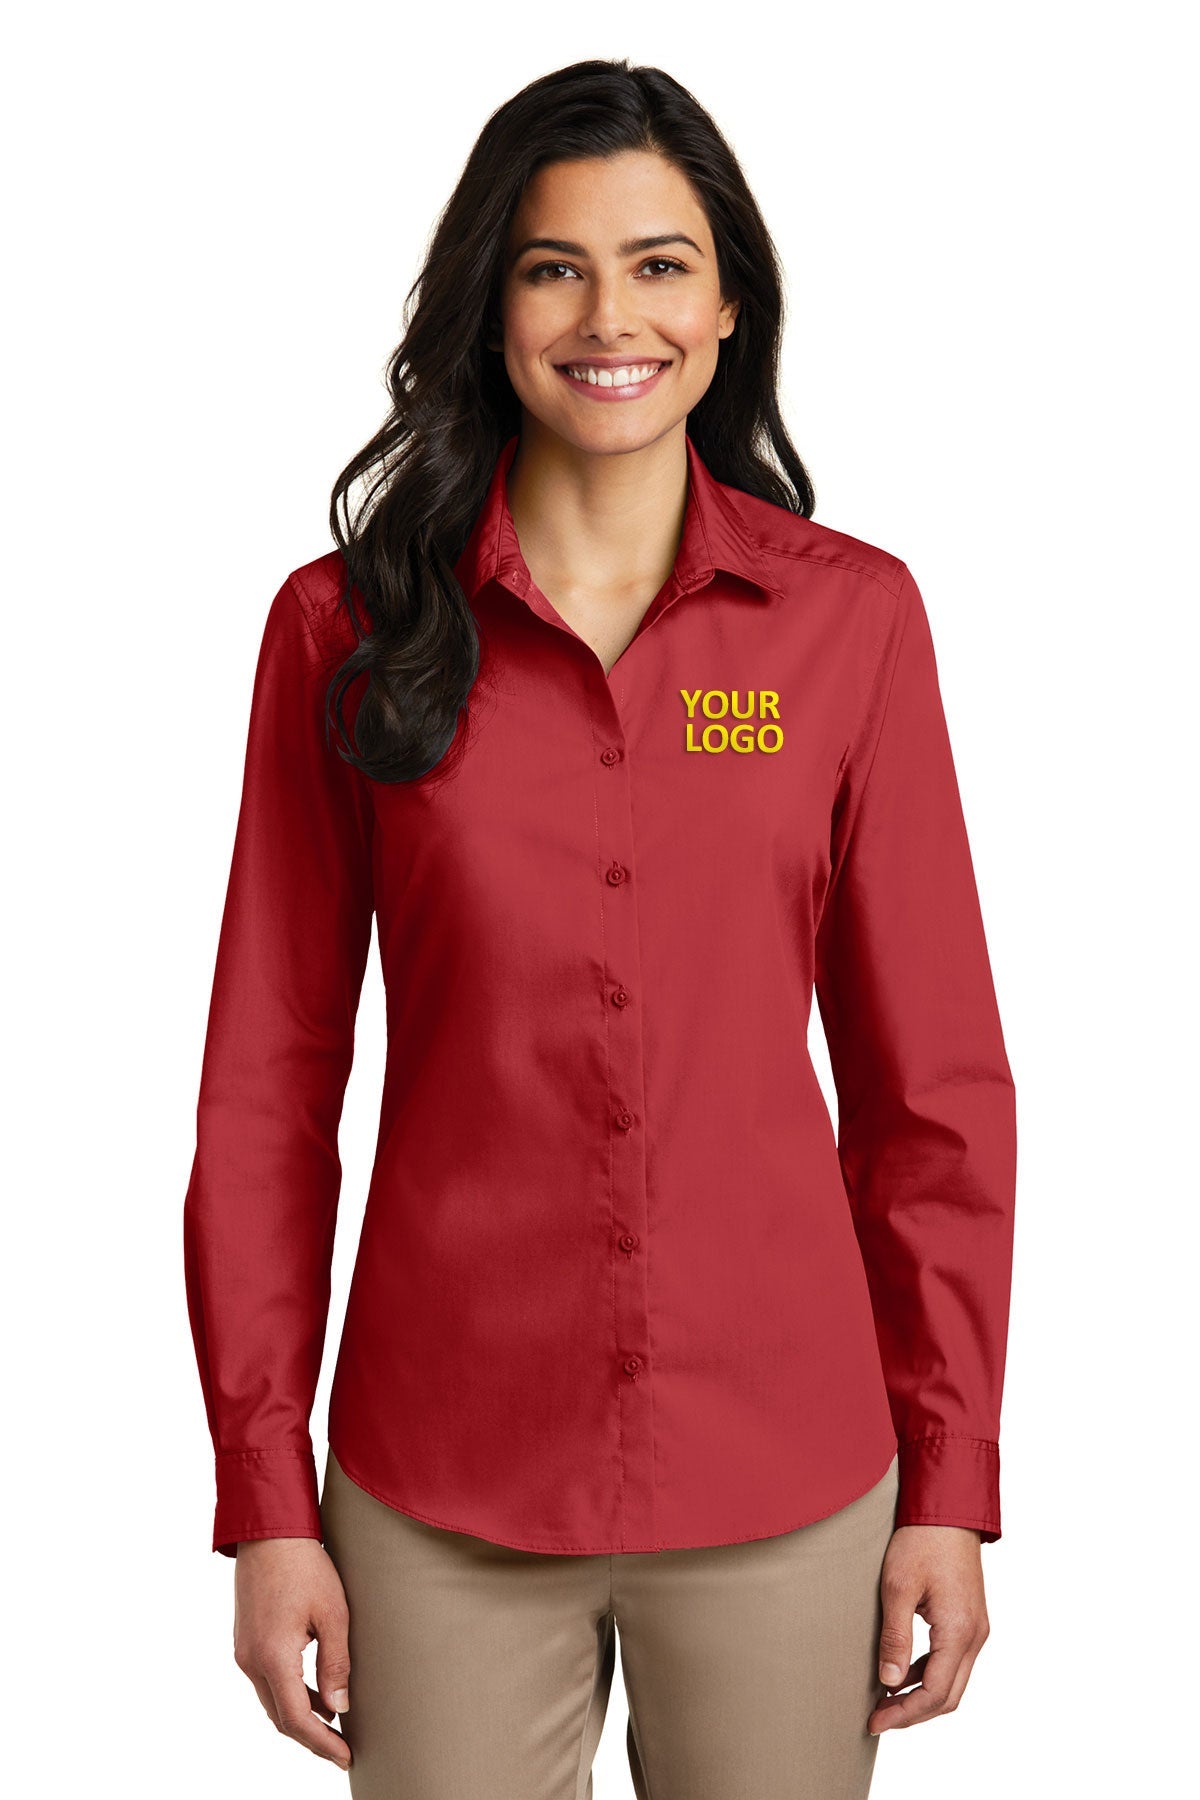 Port Authority Rich Red LW100 custom work shirts